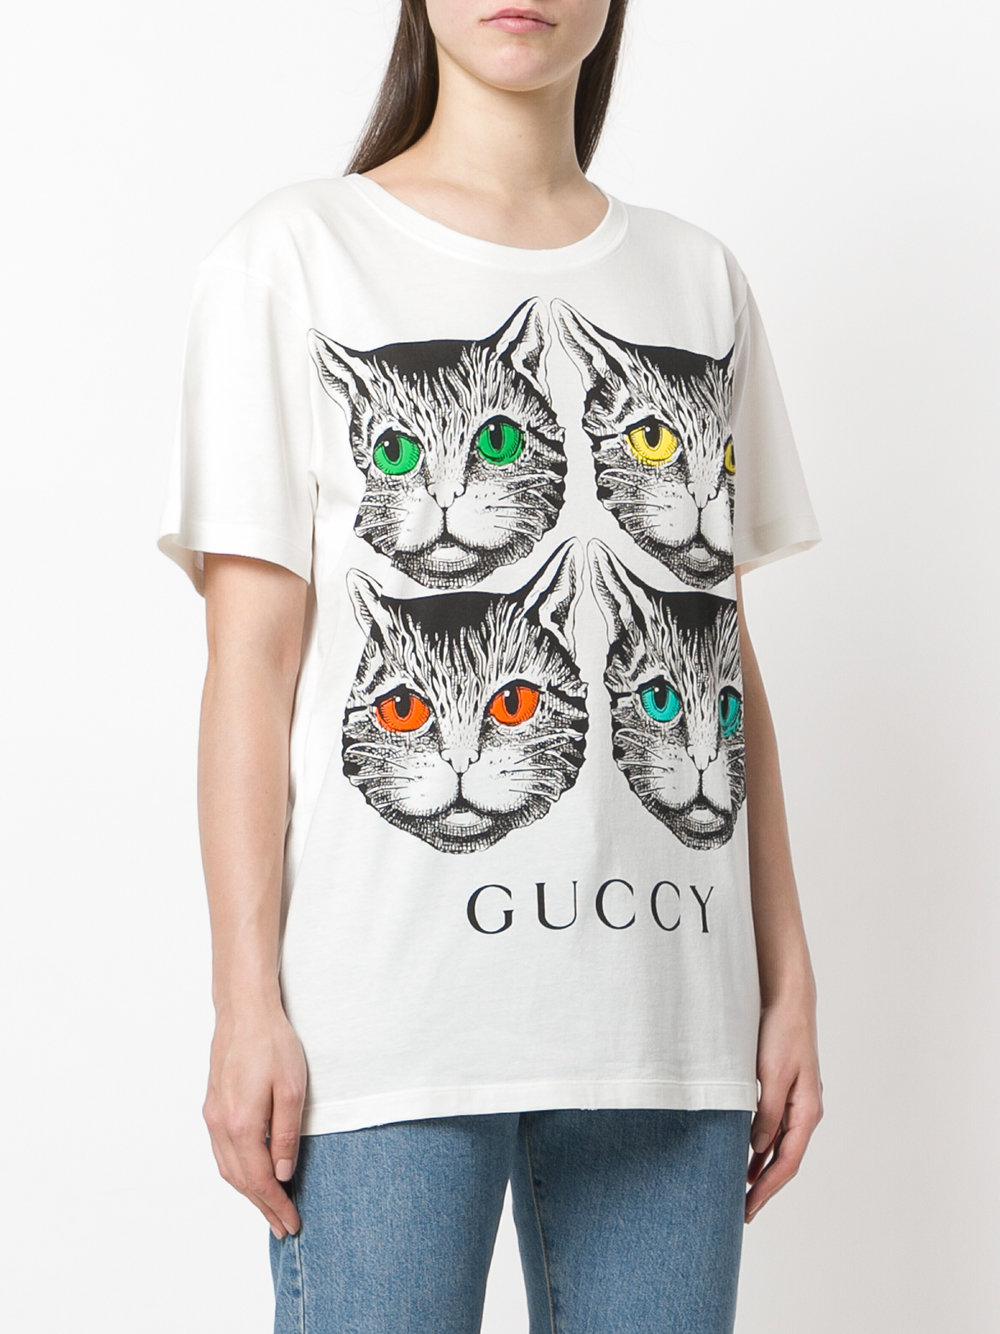 gucci cat blouse